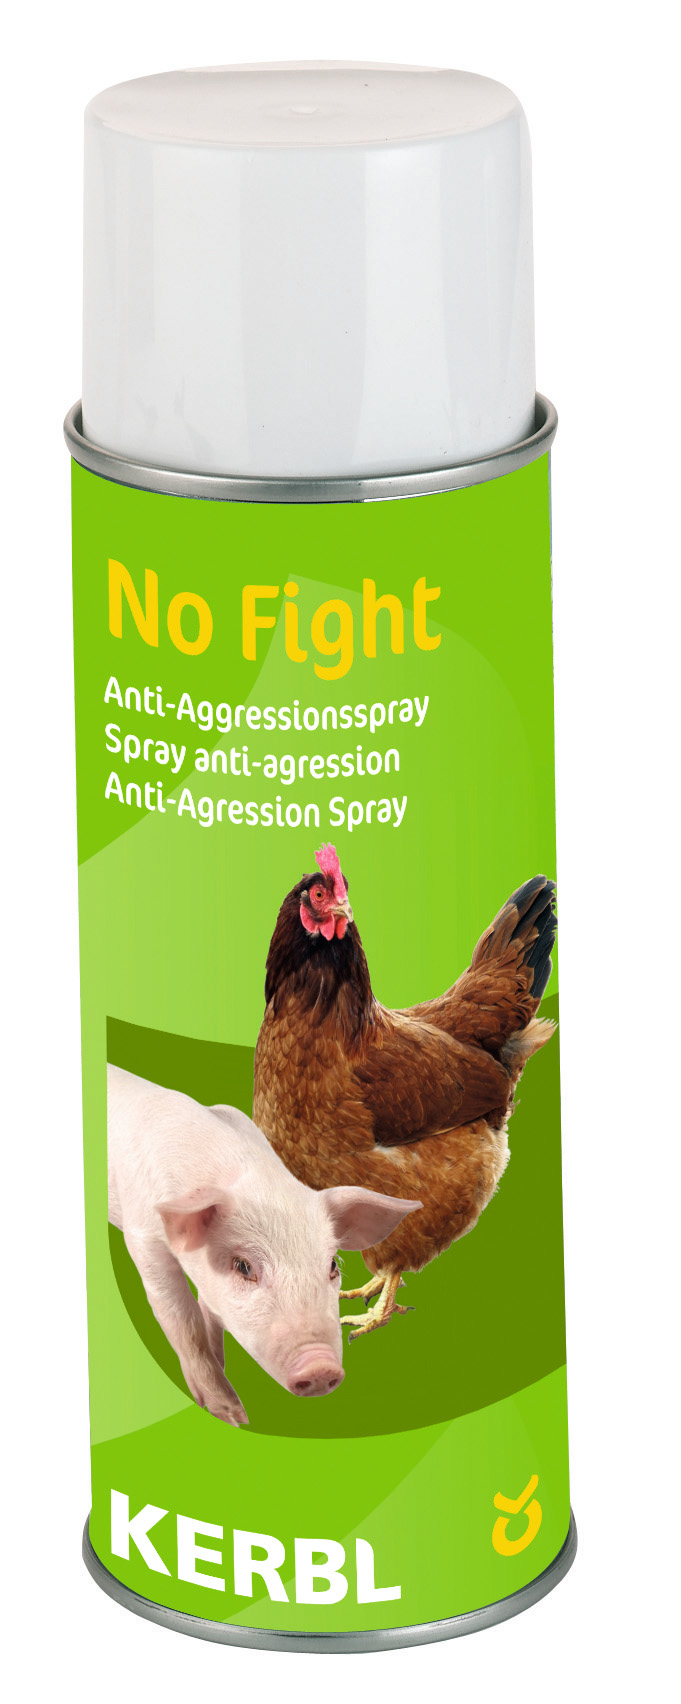 Anti-Aggressionsspray No Fight 400 ml